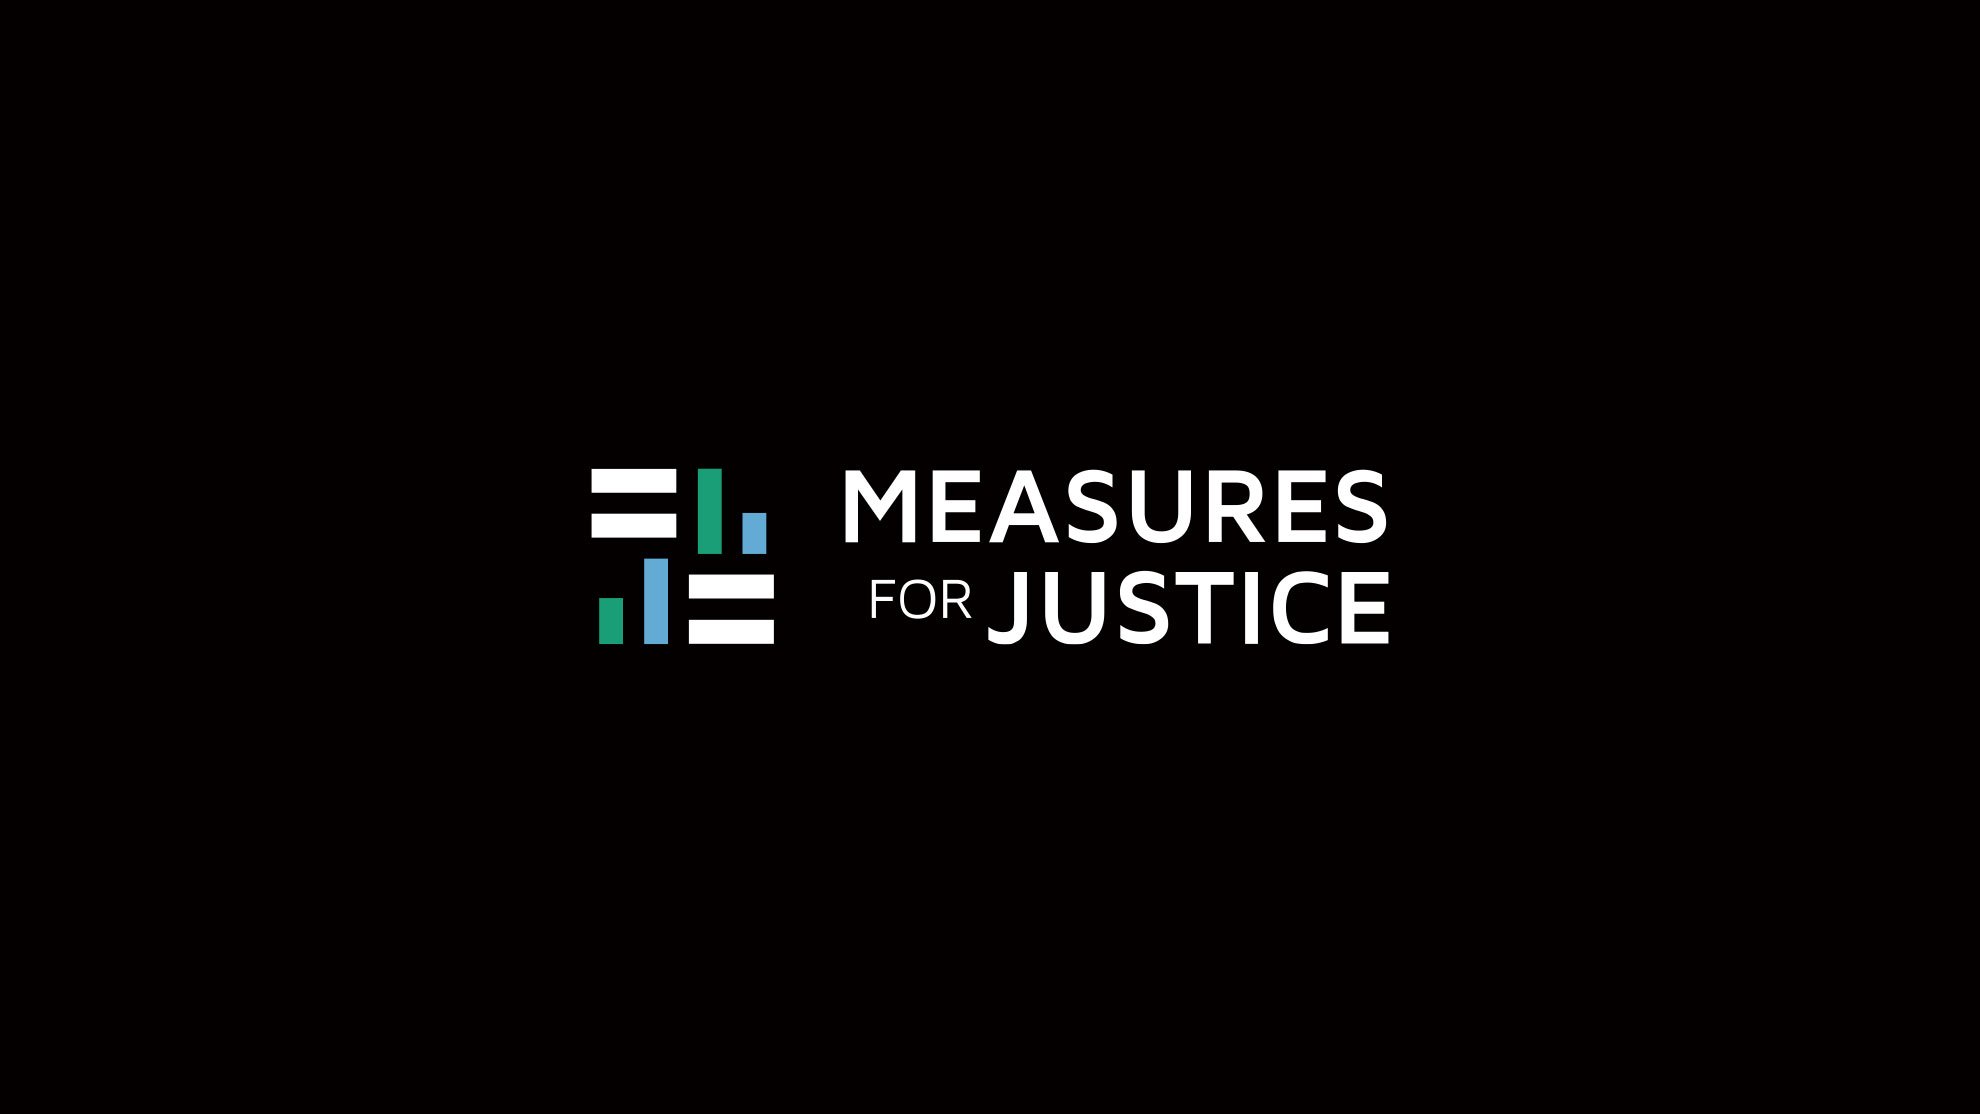 MeasuresForJustice-CommunityGuide-Cover-layout-design.jpg